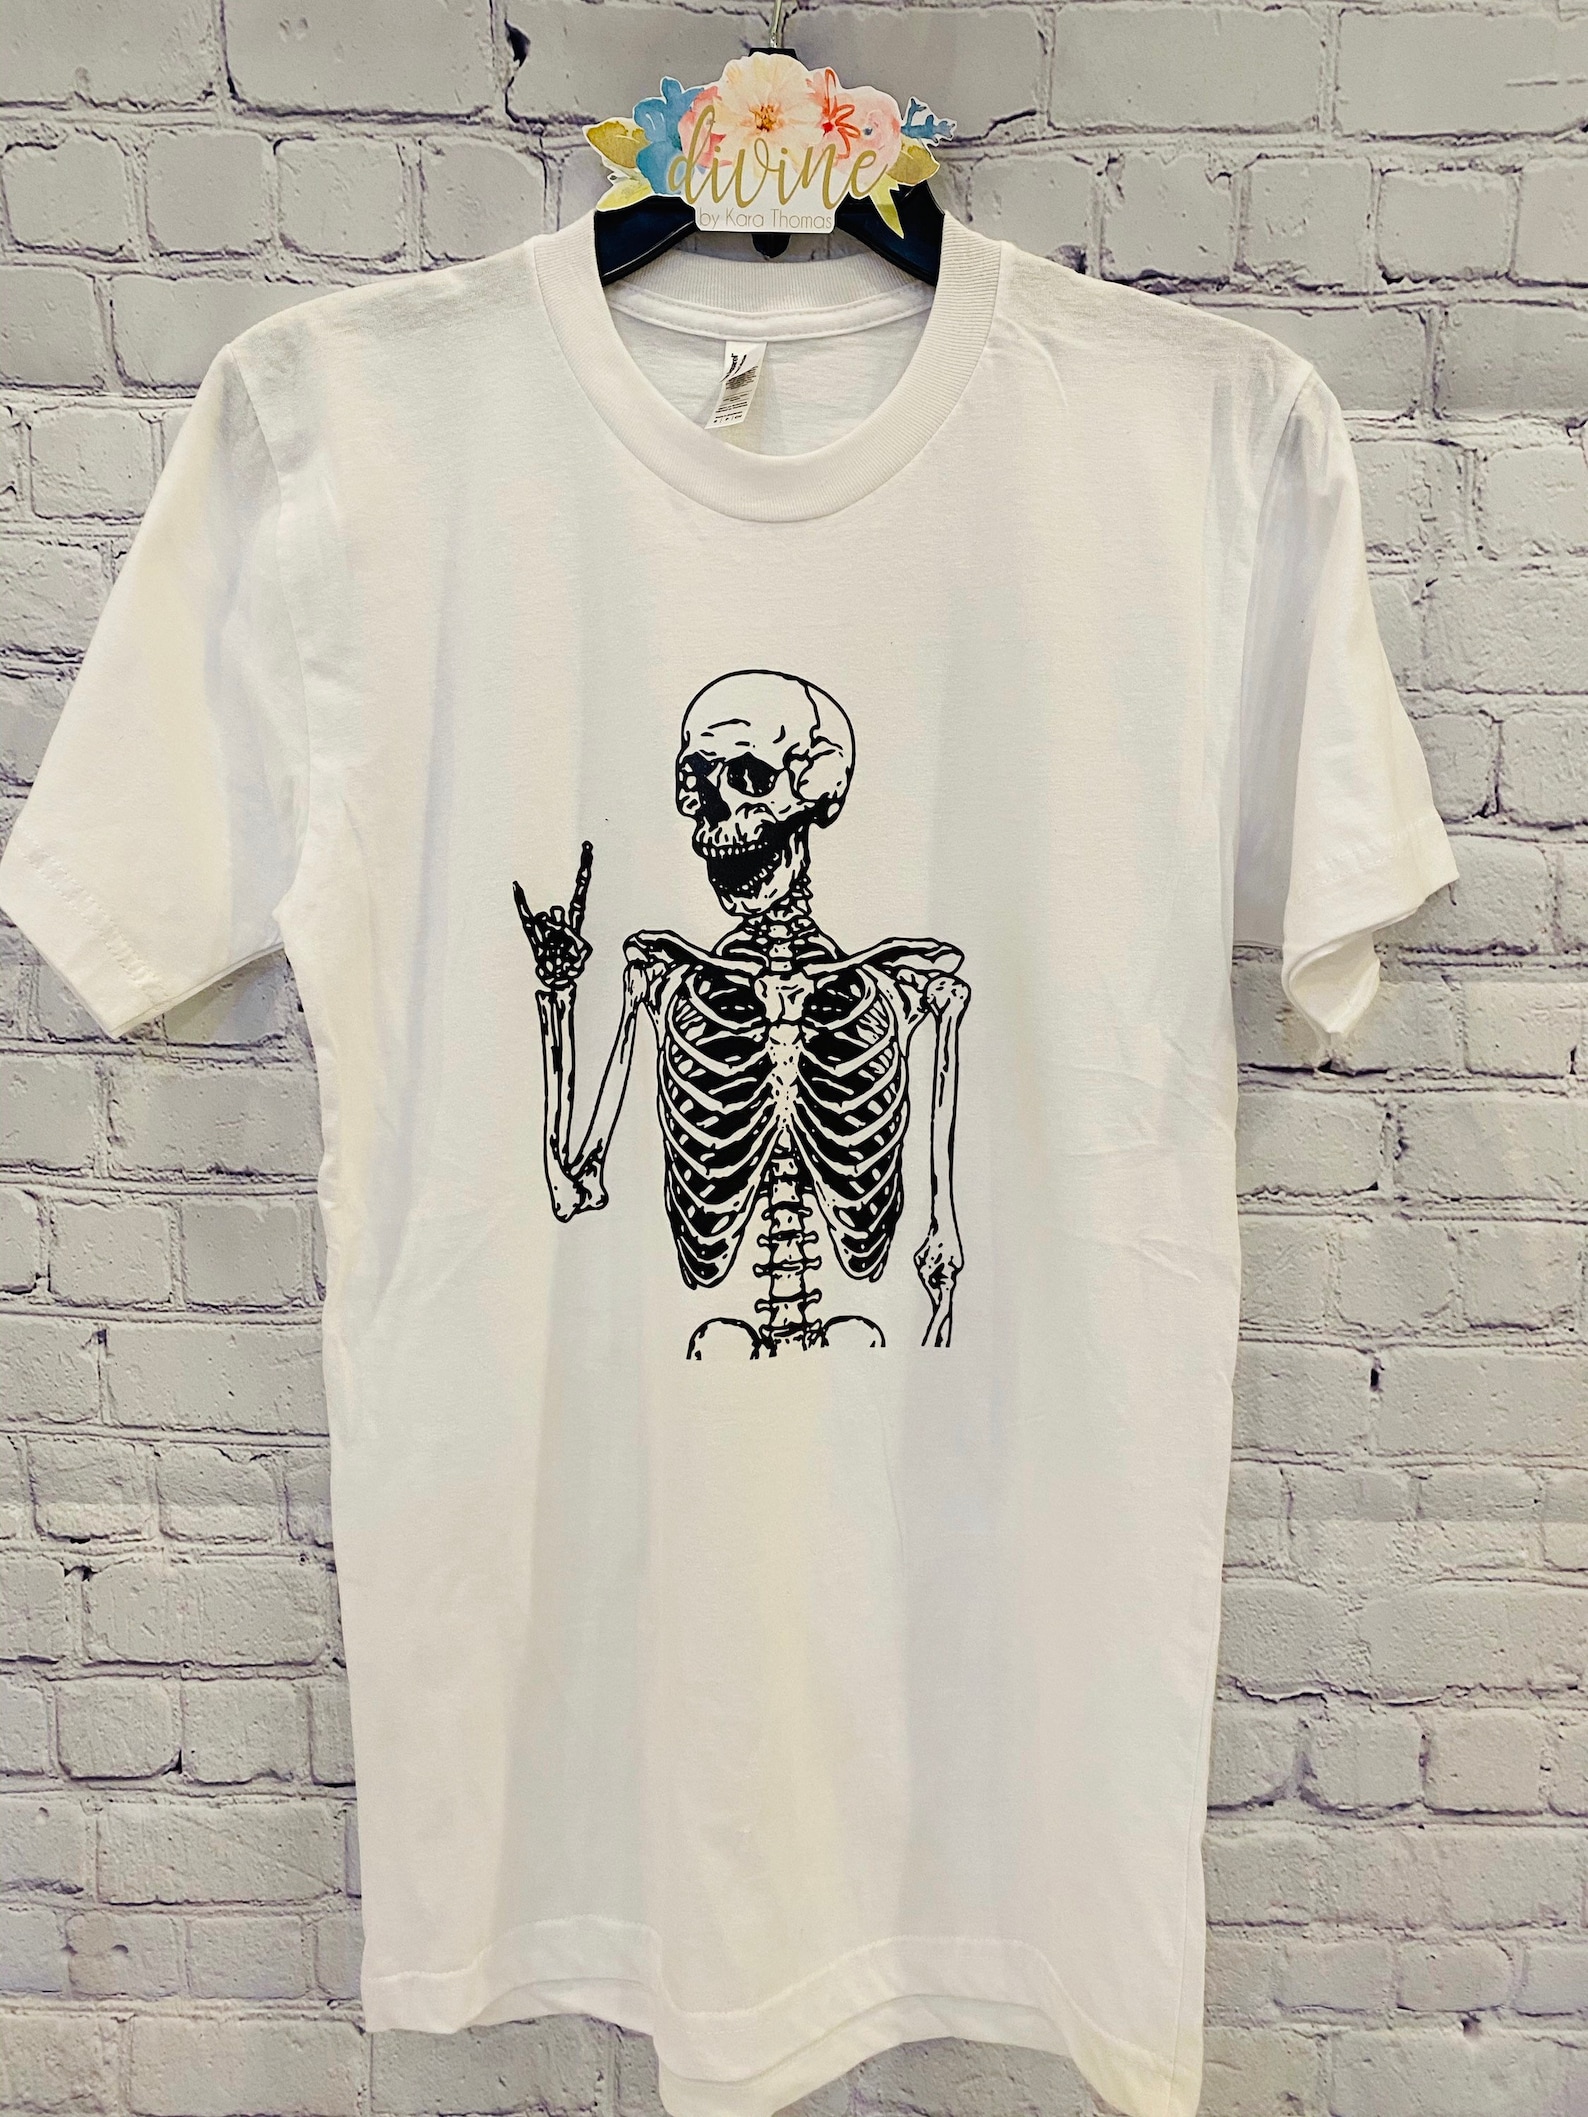 Rock on skeleton tee shirt / Rock and Roll Skeleton / | Etsy